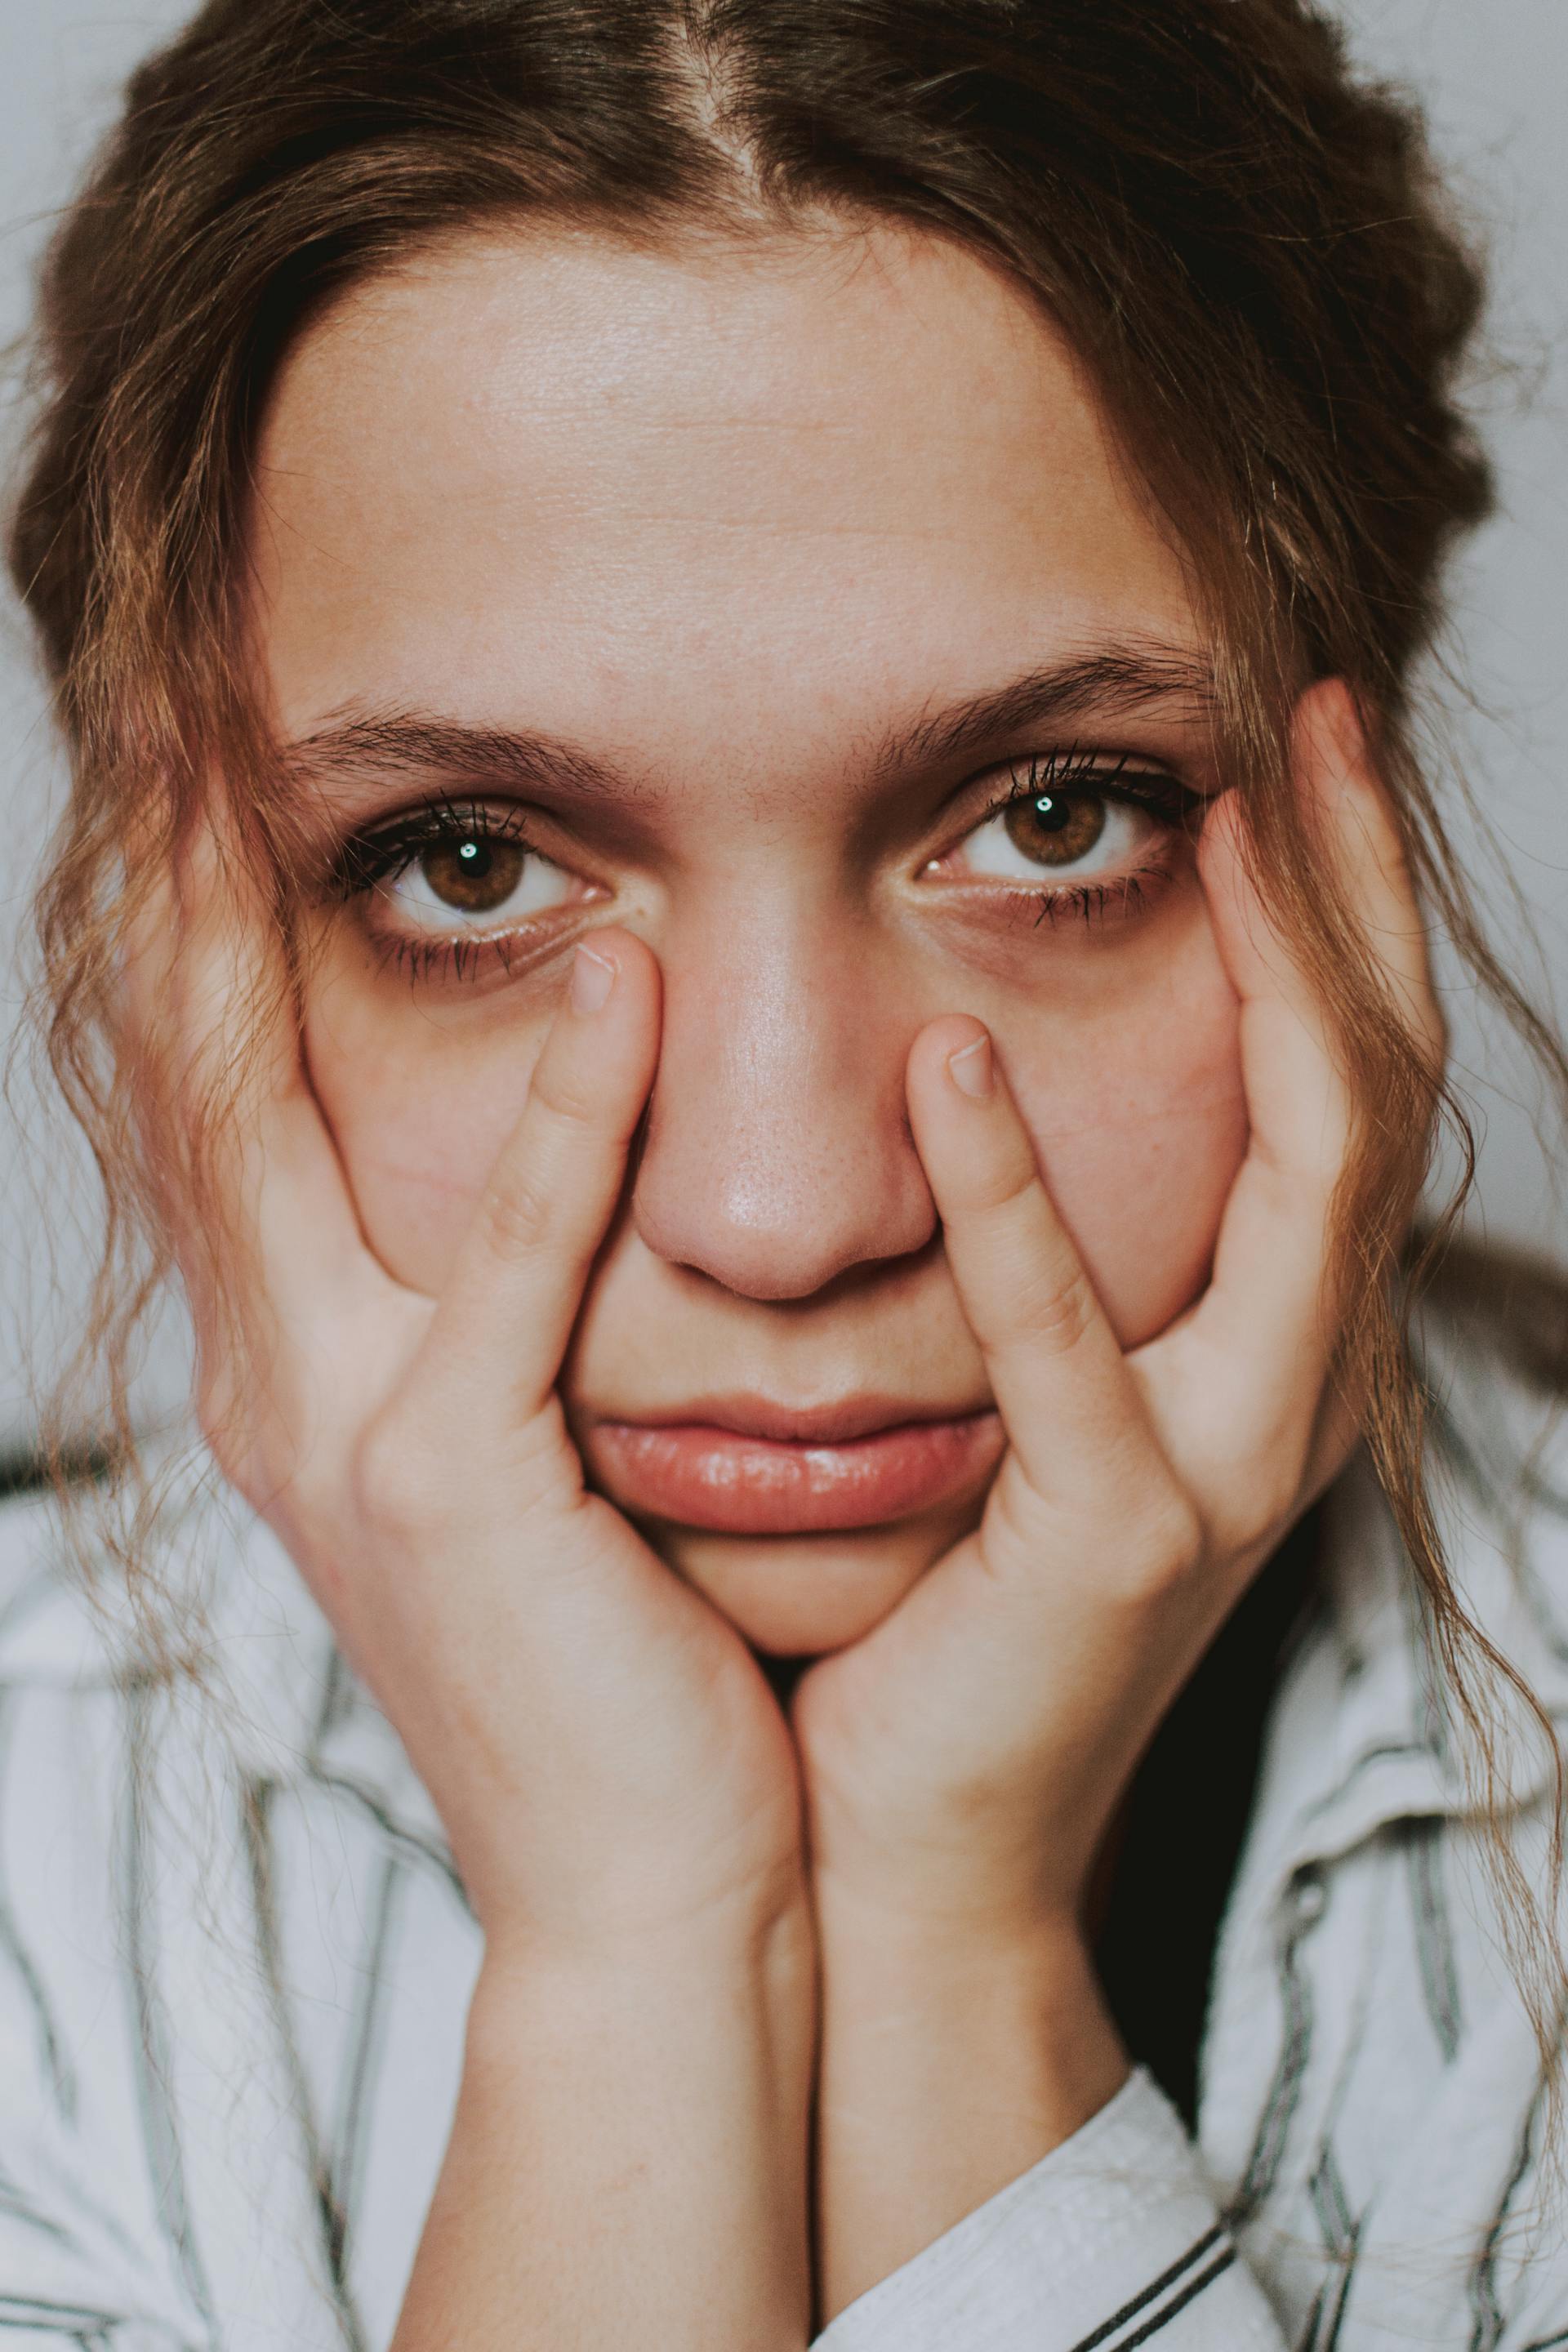 Eine gestresste Frau | Quelle: Pexels